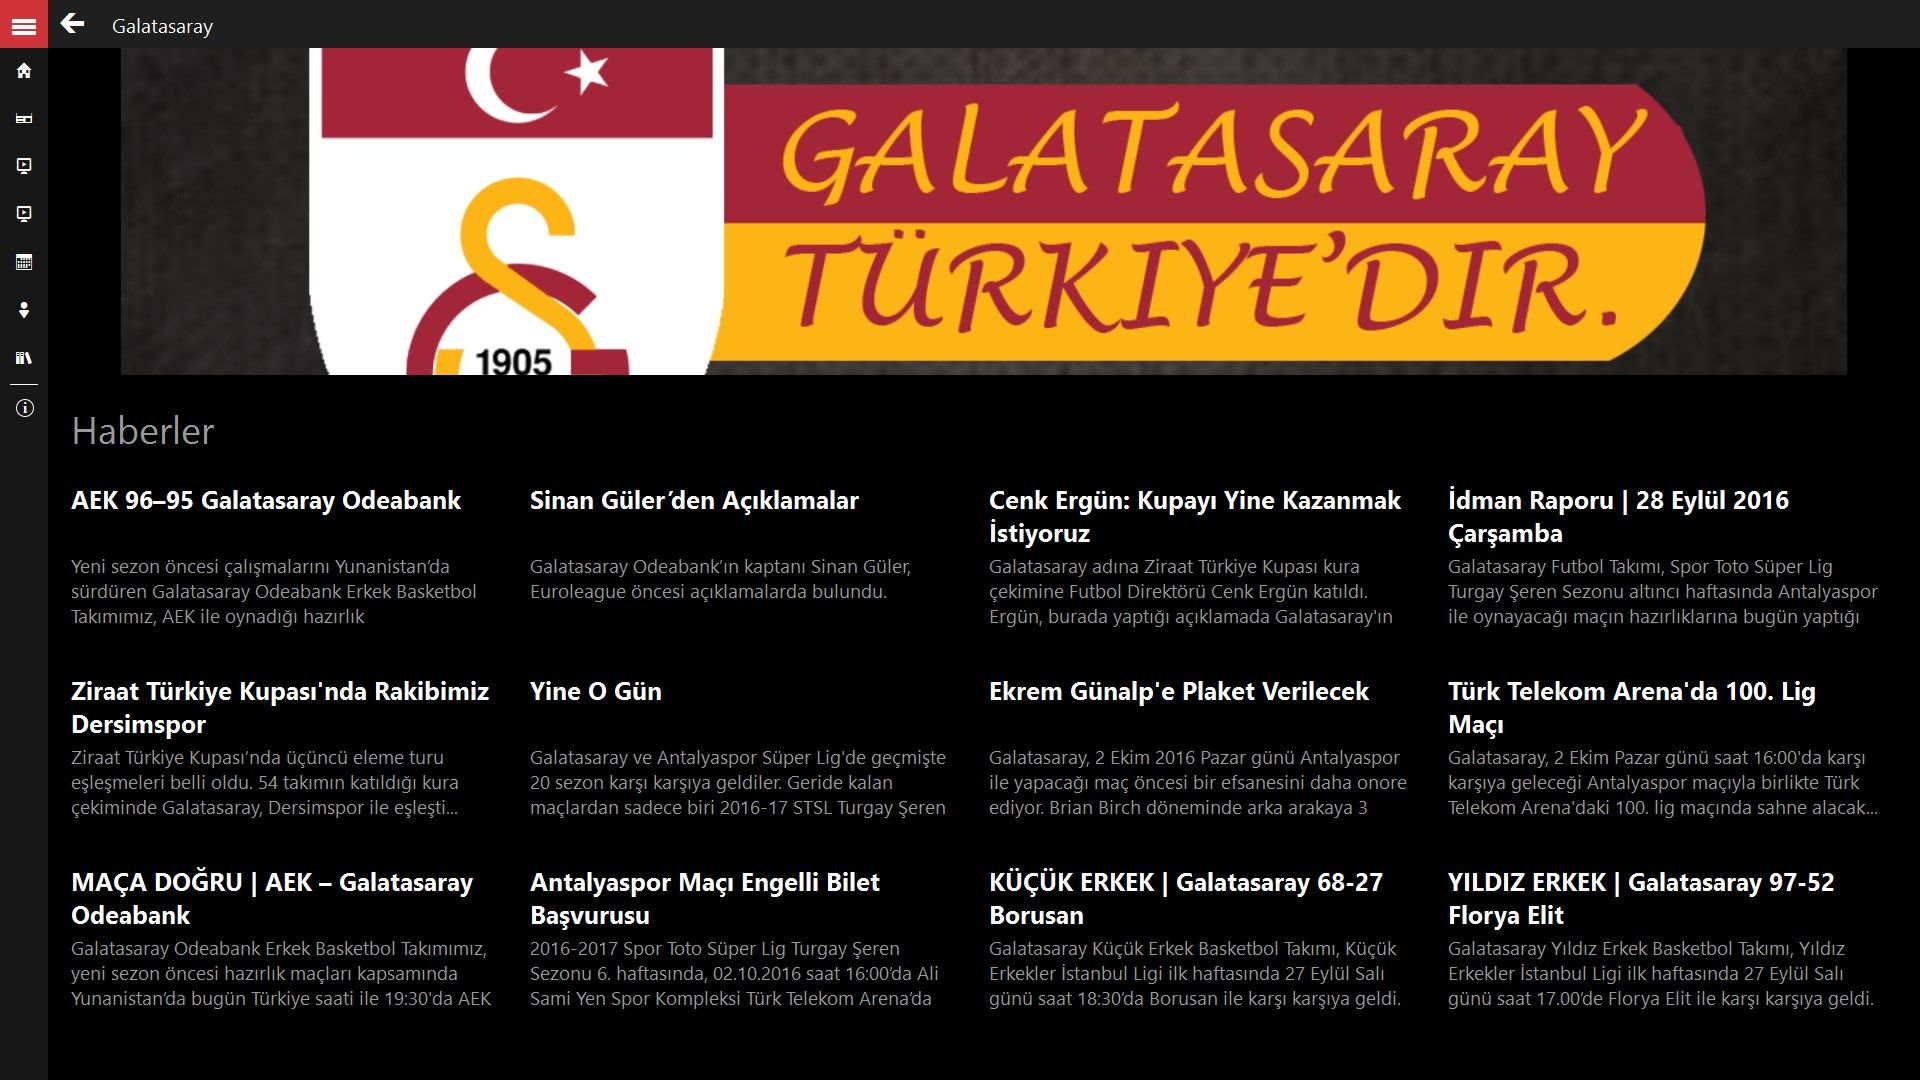 Galatasaray1905